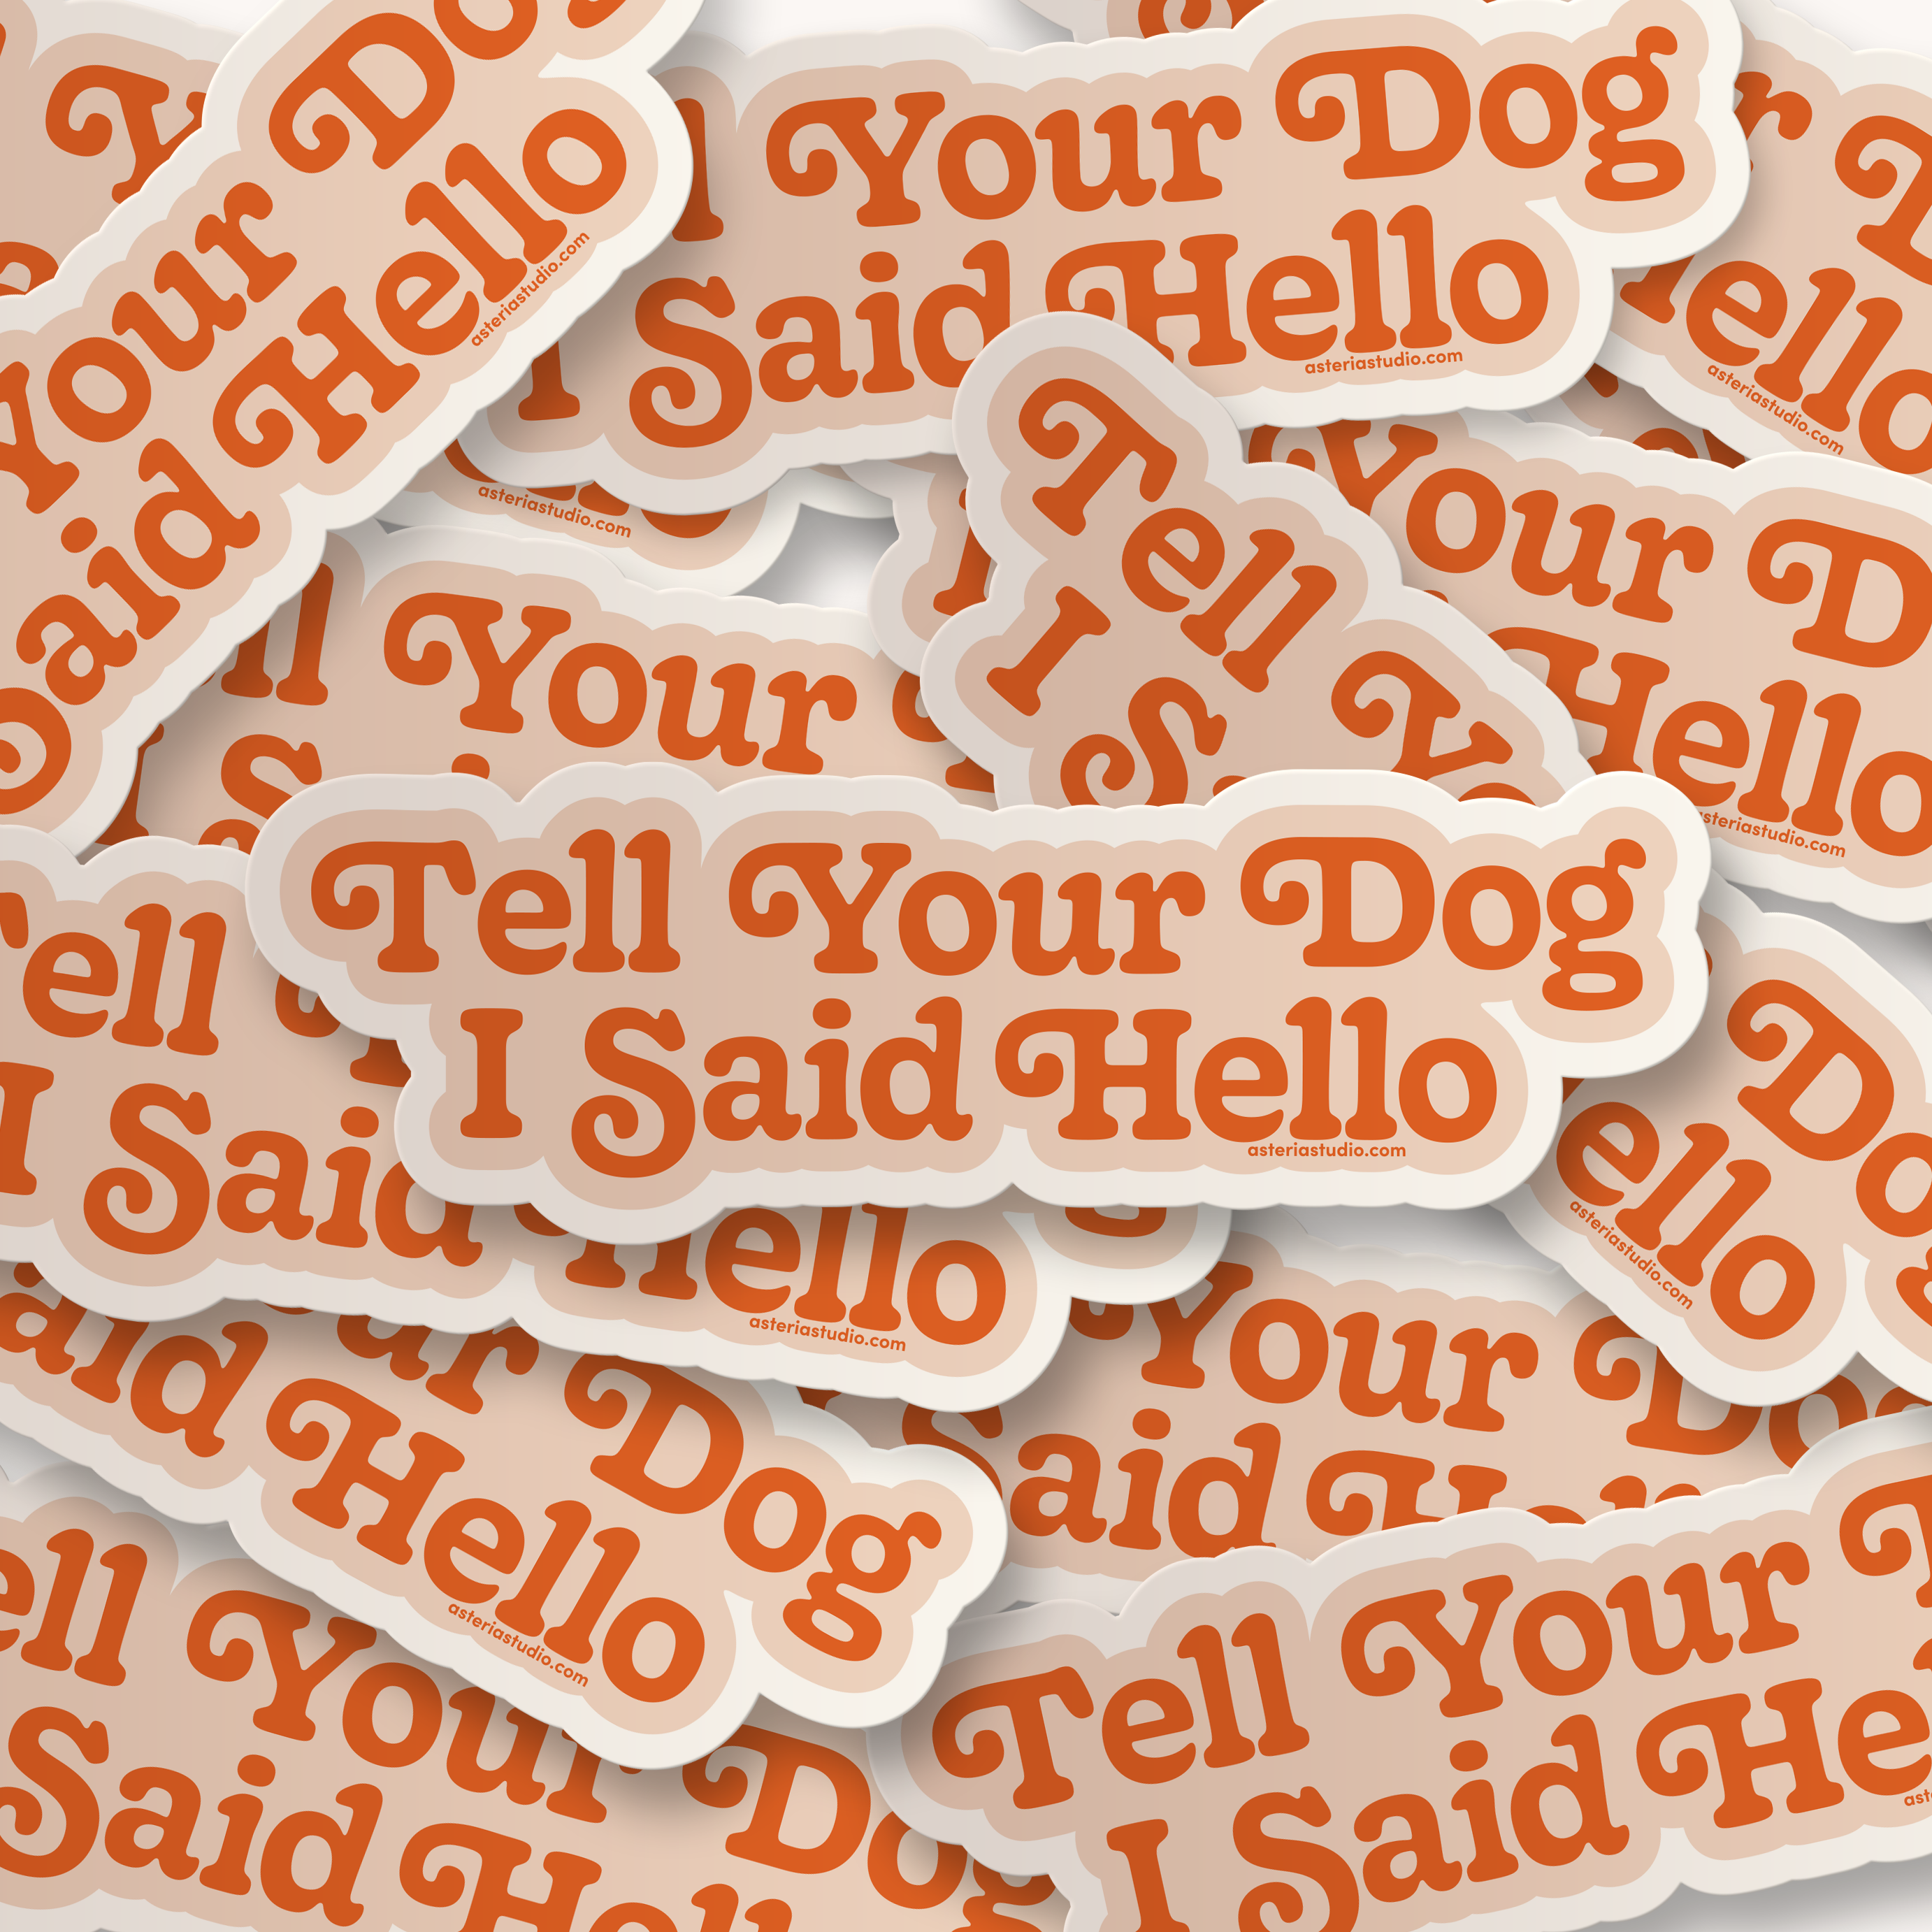 Tell Your Dog I Said Hello Sticker